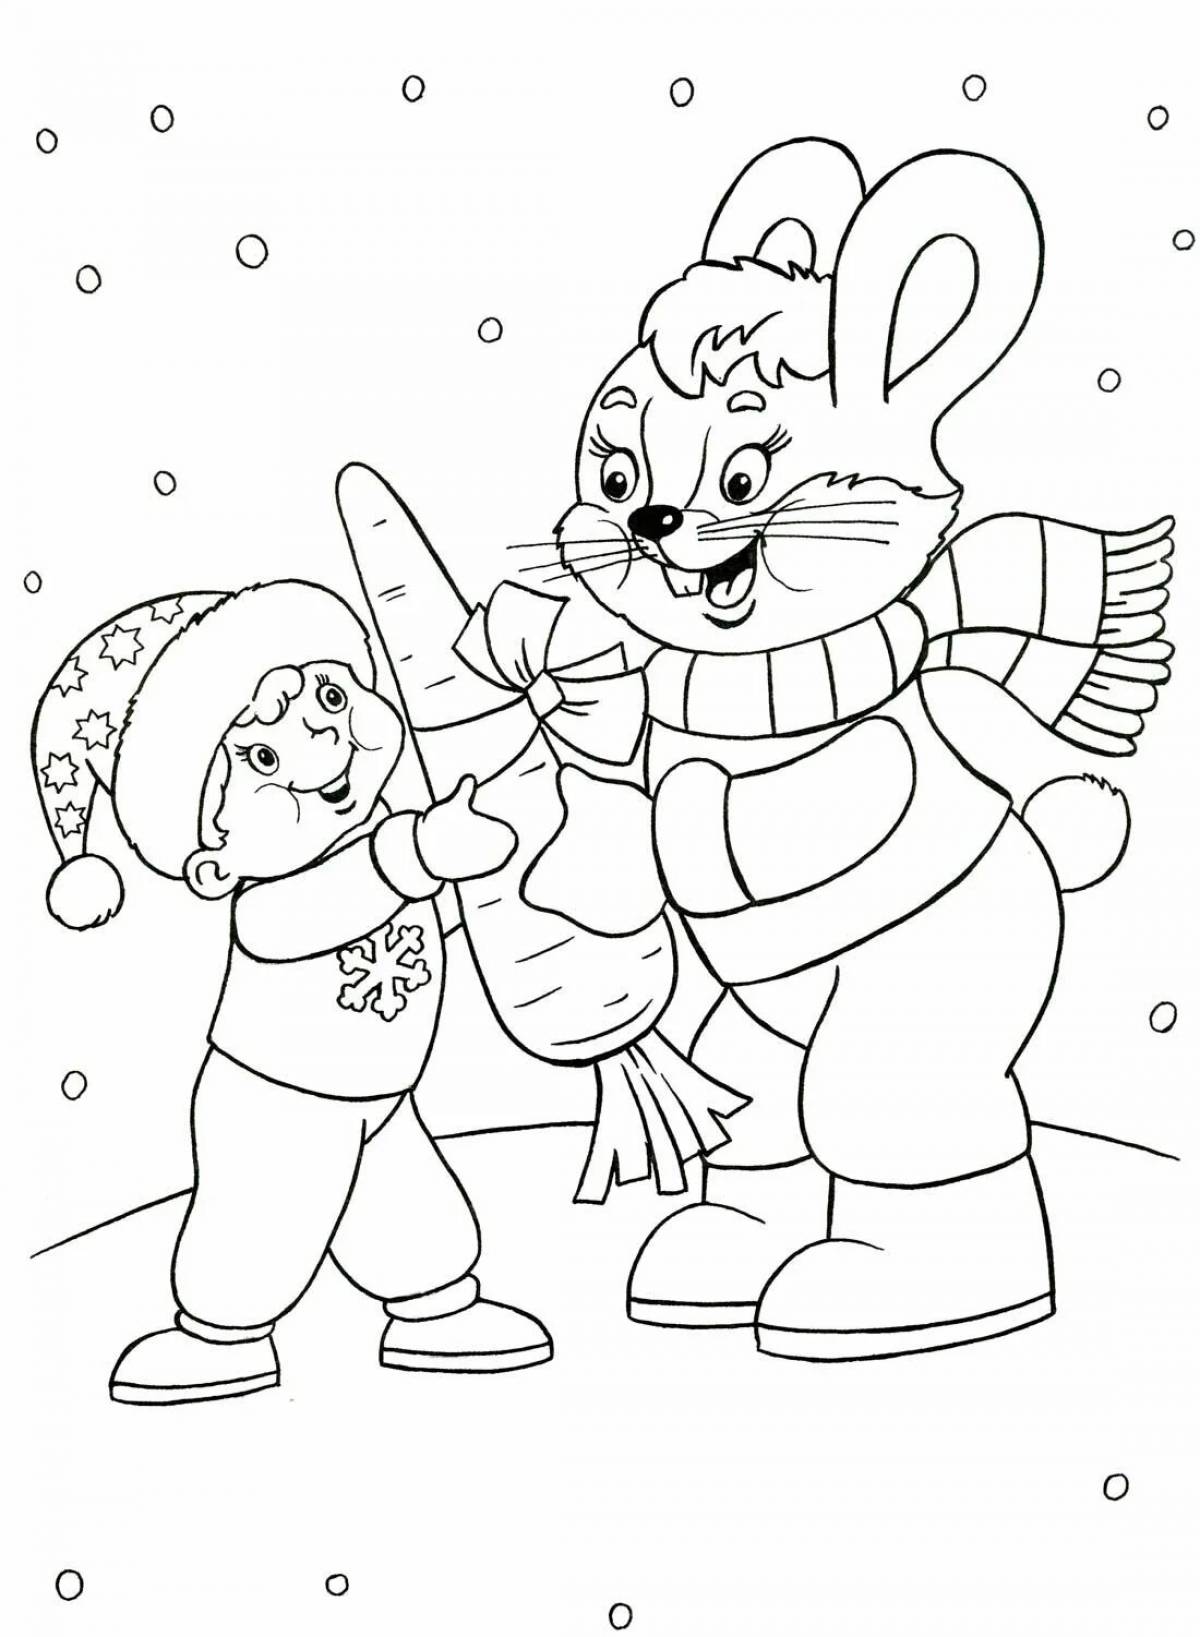 Fantastic coloring of santa claus and rabbit